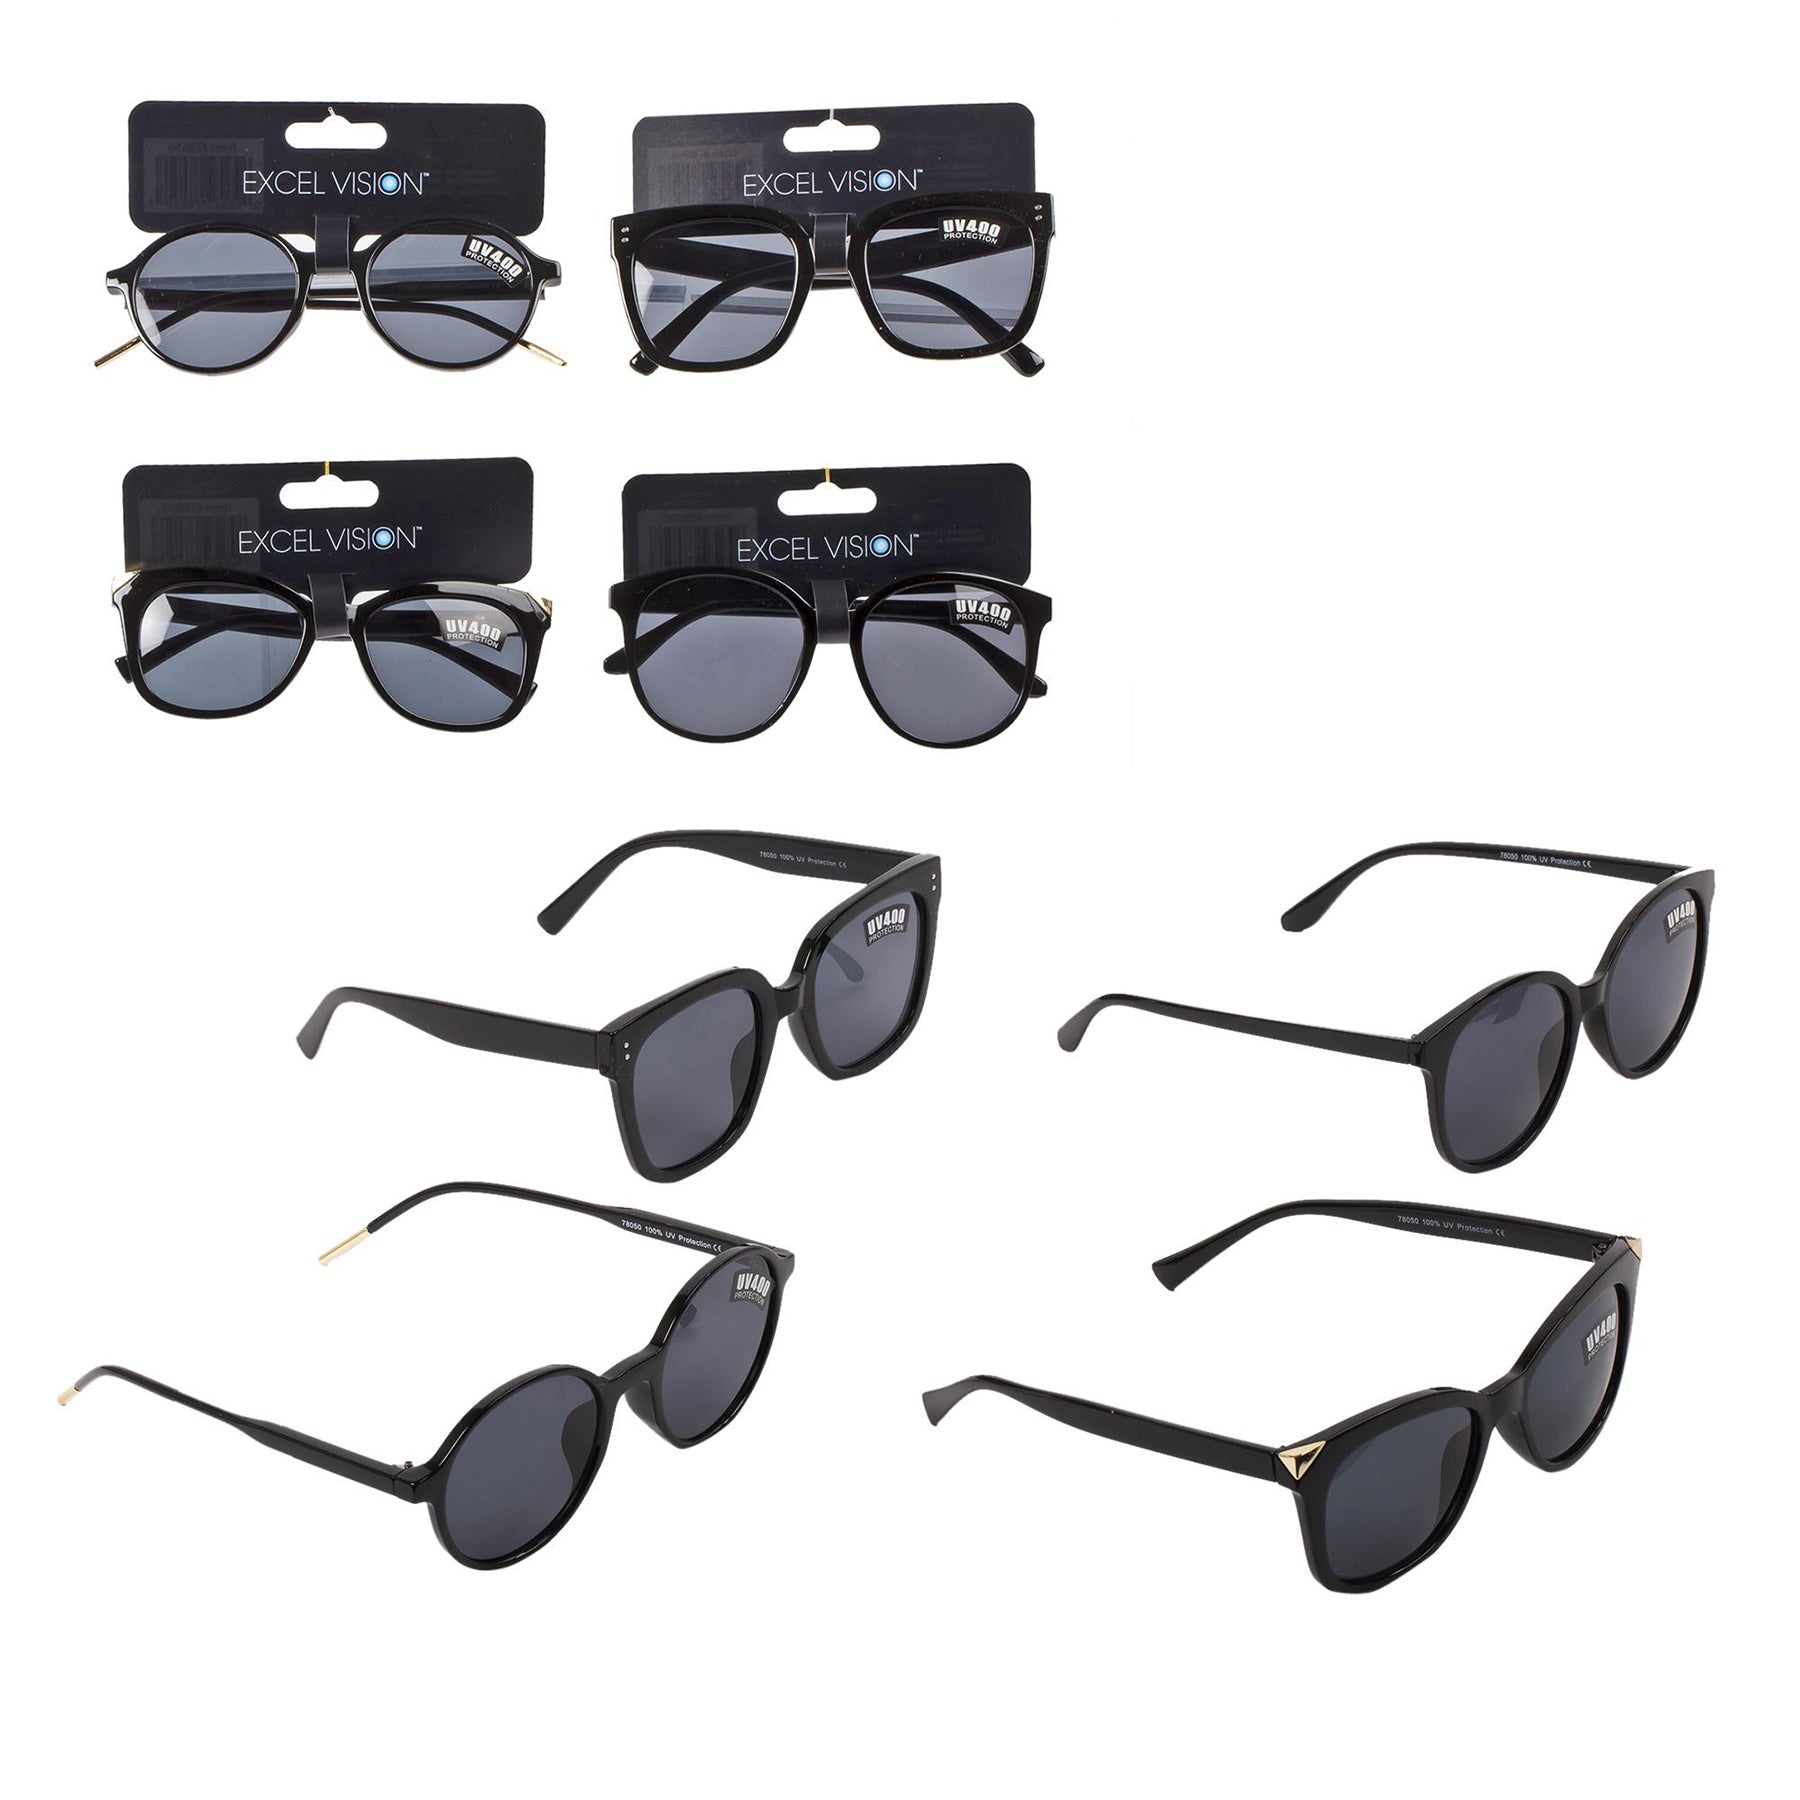 Excel Vision Women's Black Sunglasses